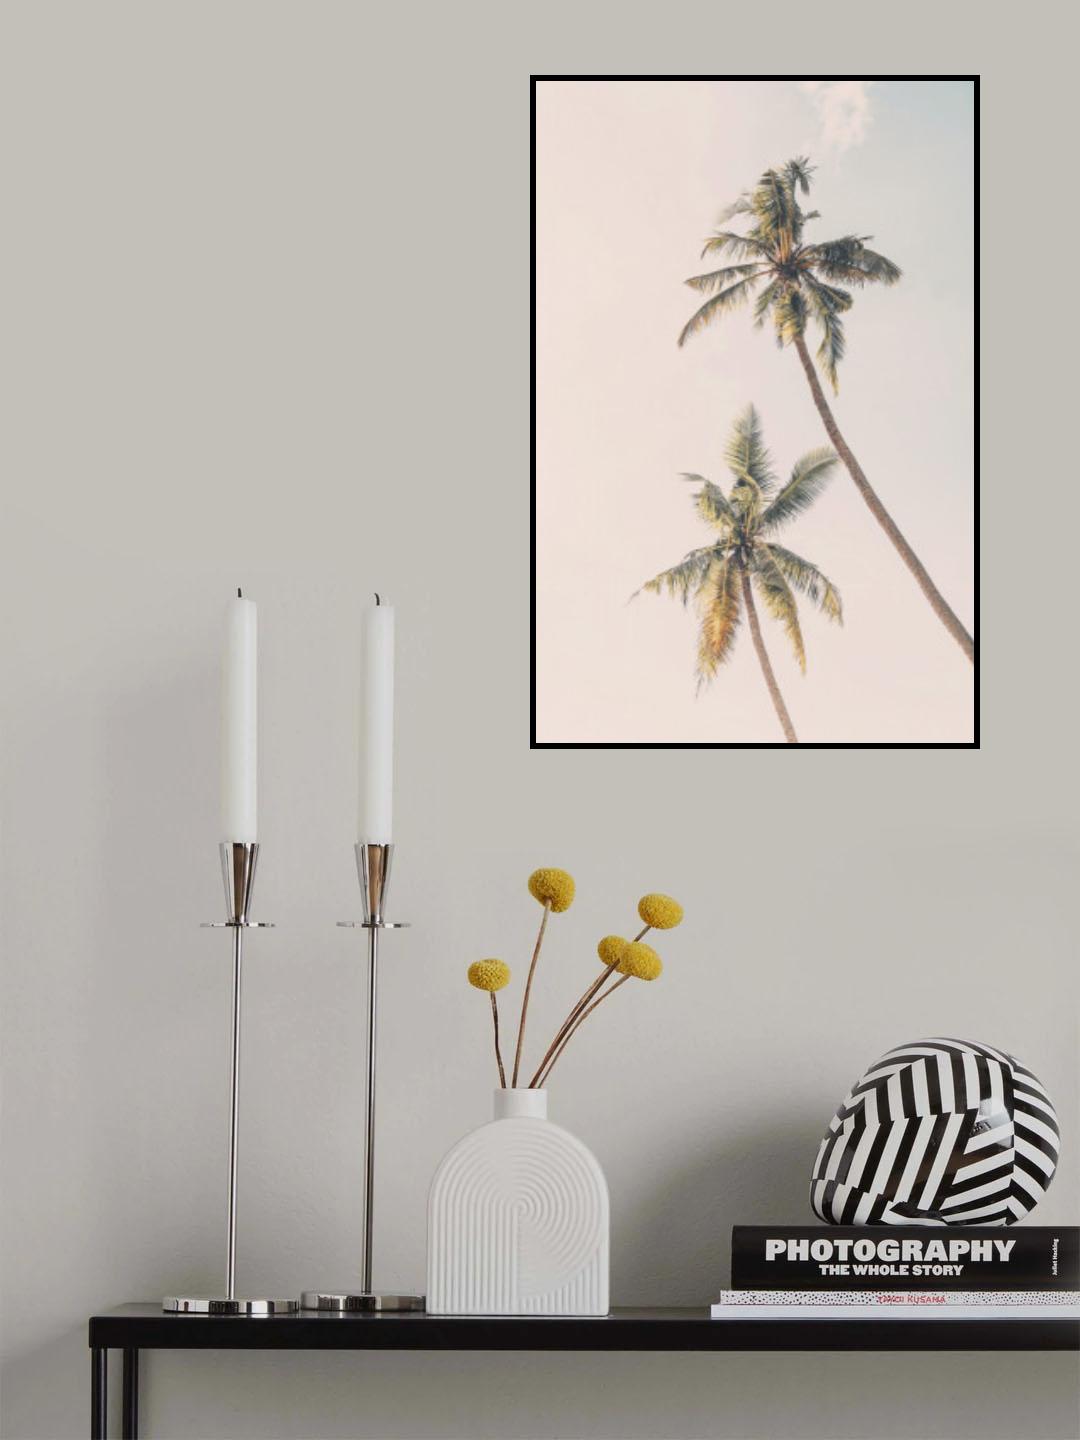 Tropical Palms Poster och Canvastavla